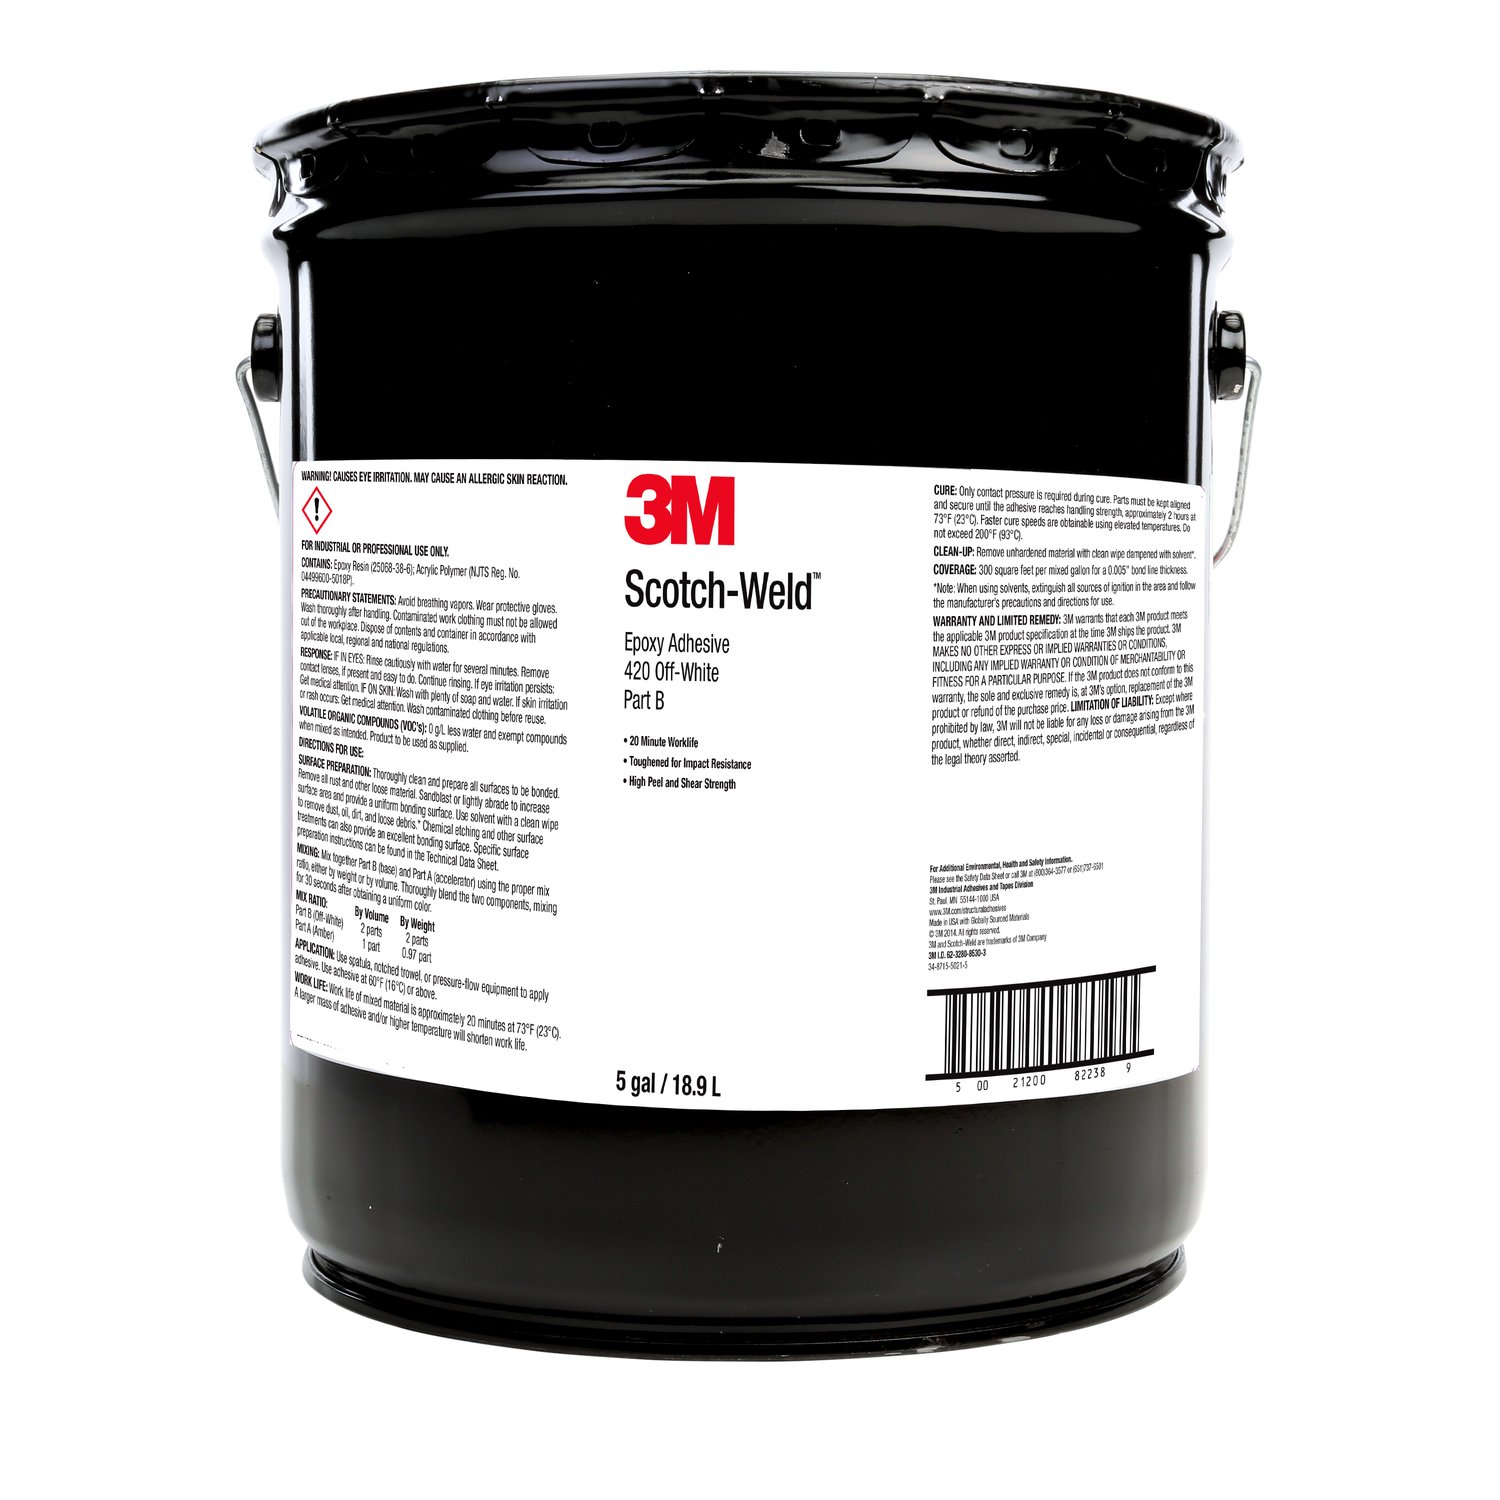 7100084536 - 3M Scotch-Weld Epoxy Adhesive 420NS, Black, Part A, 55 Gallon (43
Gallon Net), Drum